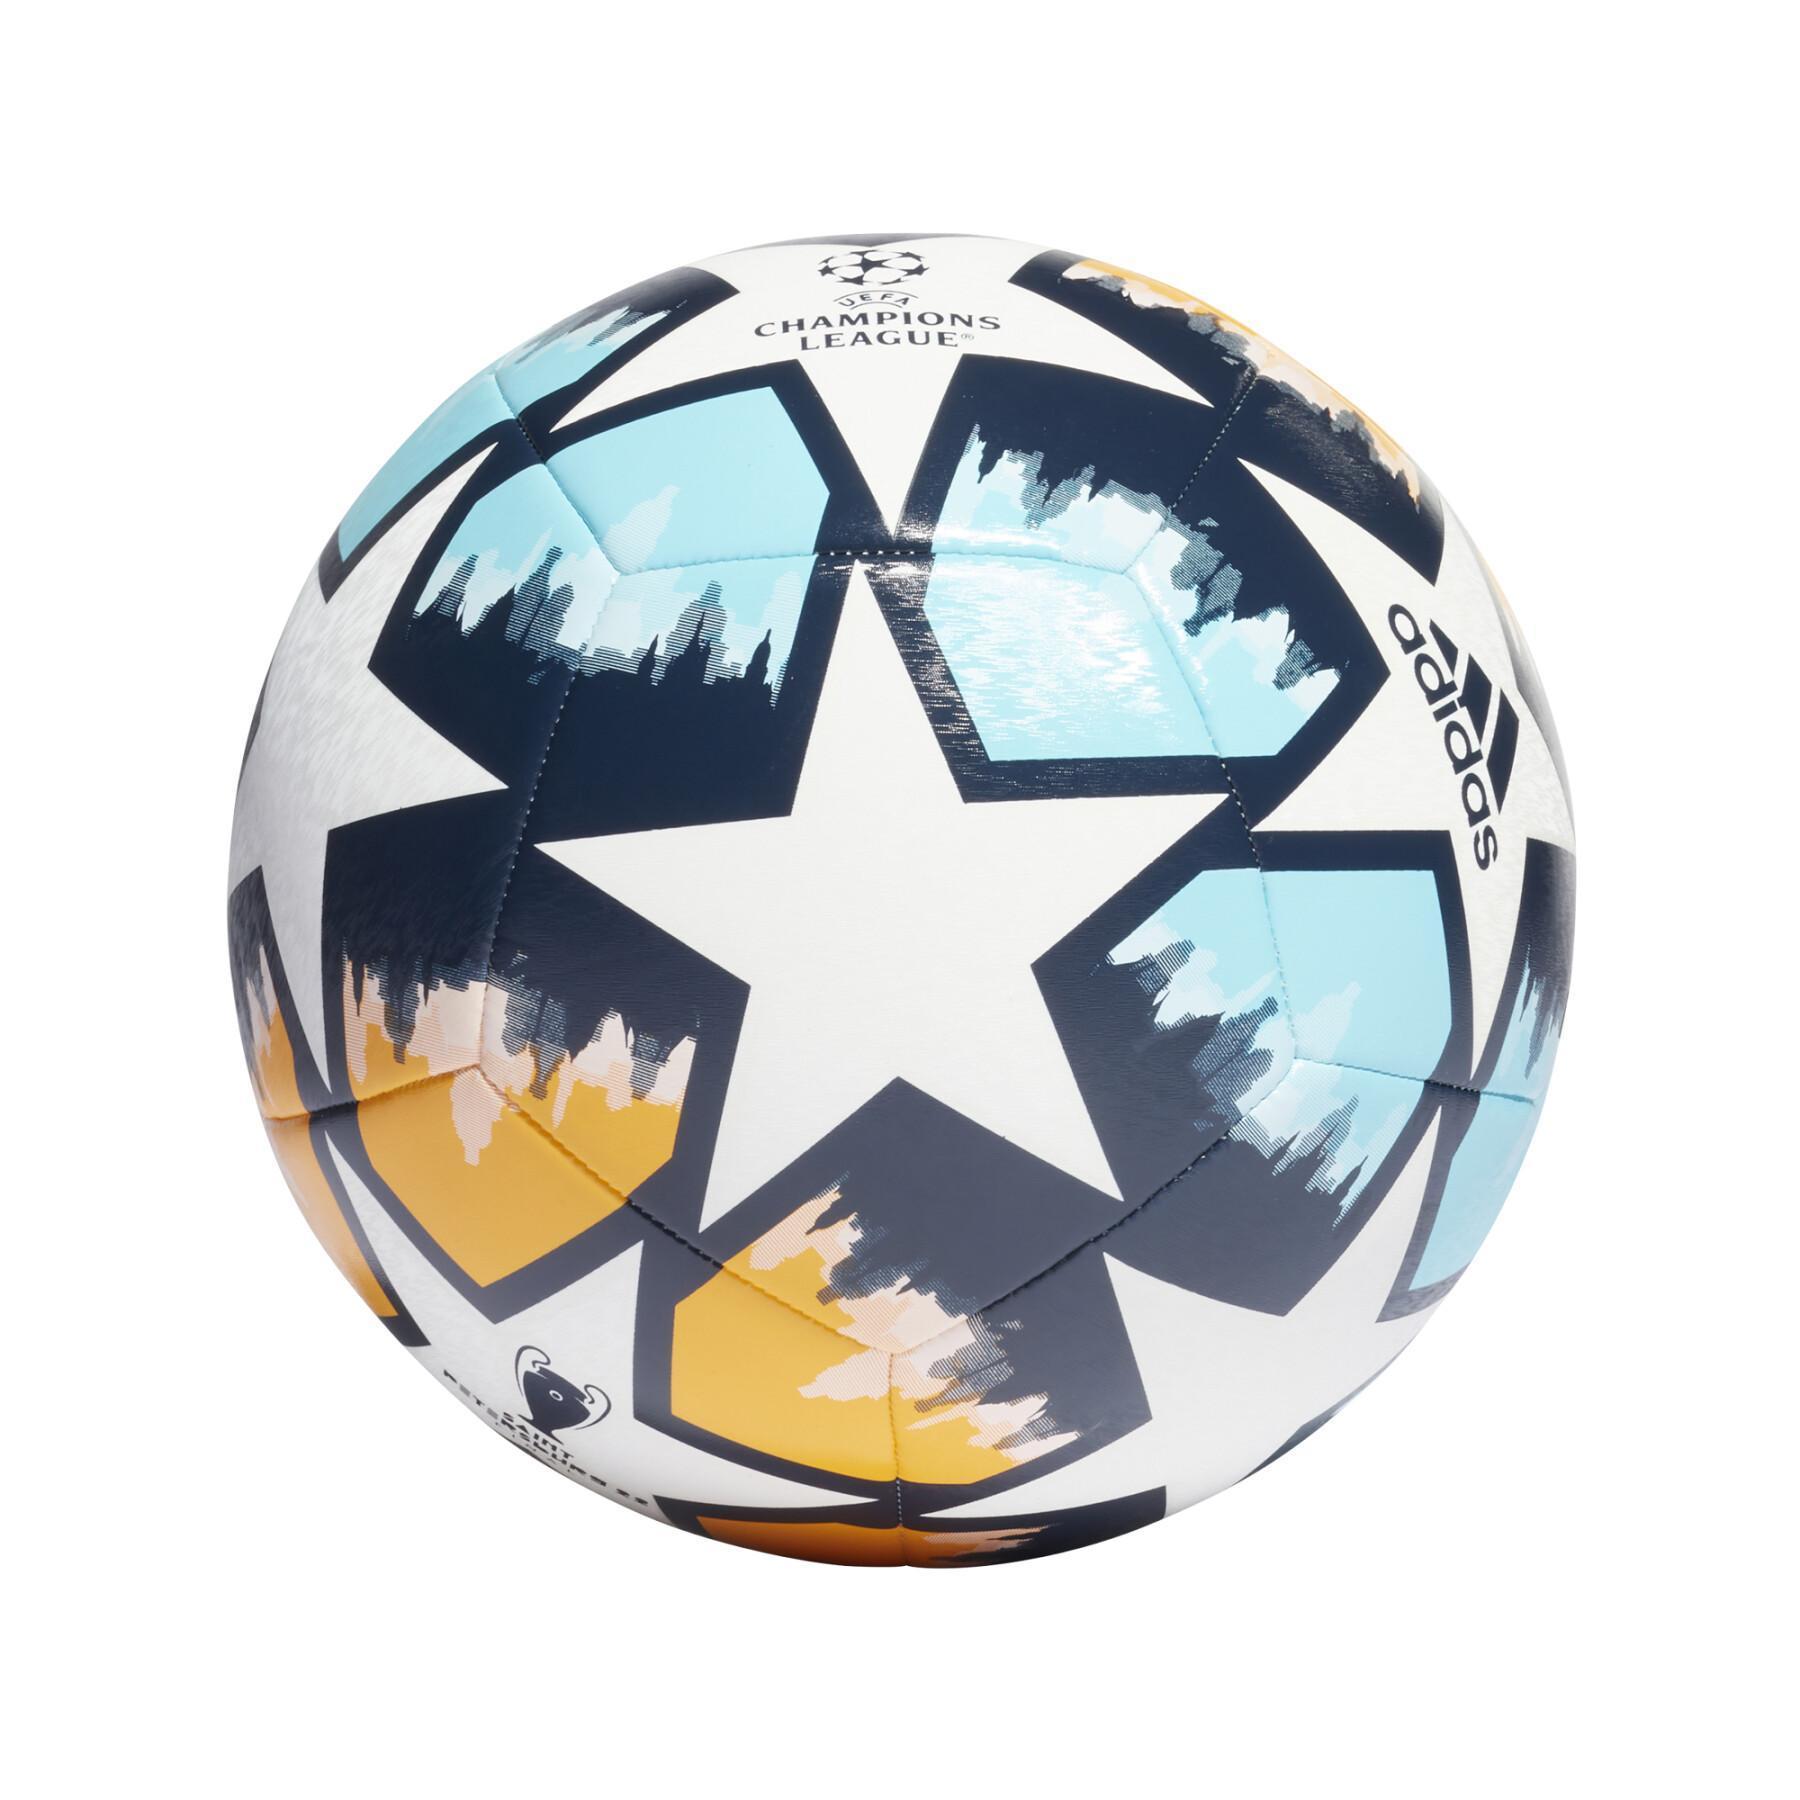 Achetez Ballon de Football UEFA Champions League 457191